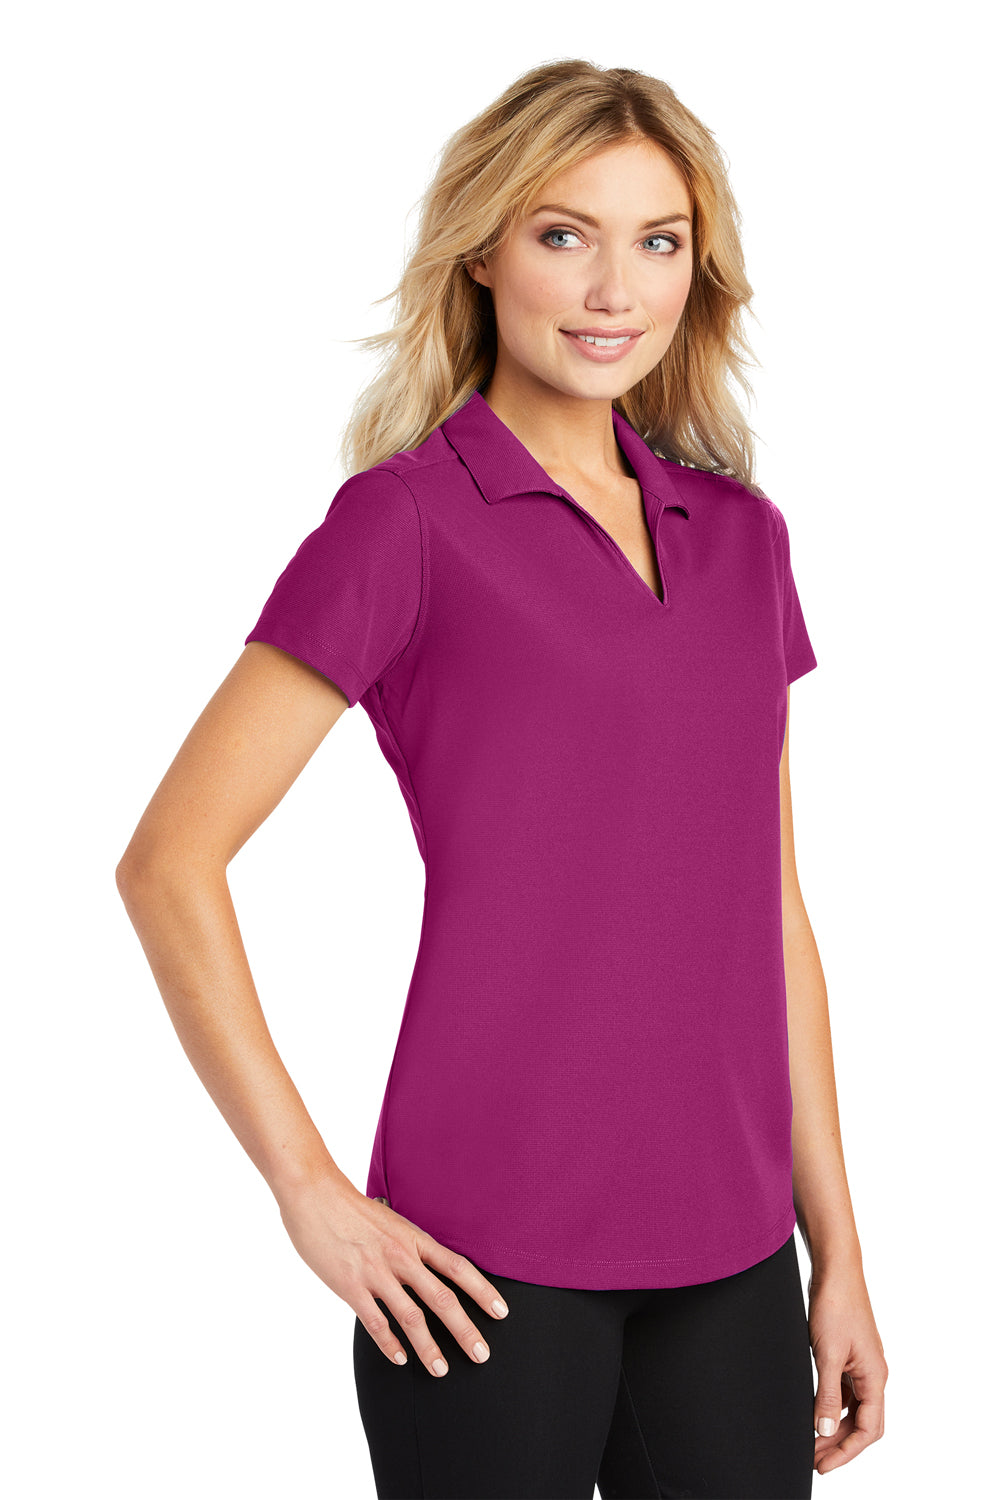 Port Authority L572 Womens Dry Zone Moisture Wicking Short Sleeve Polo Shirt Magenta Purple 3Q